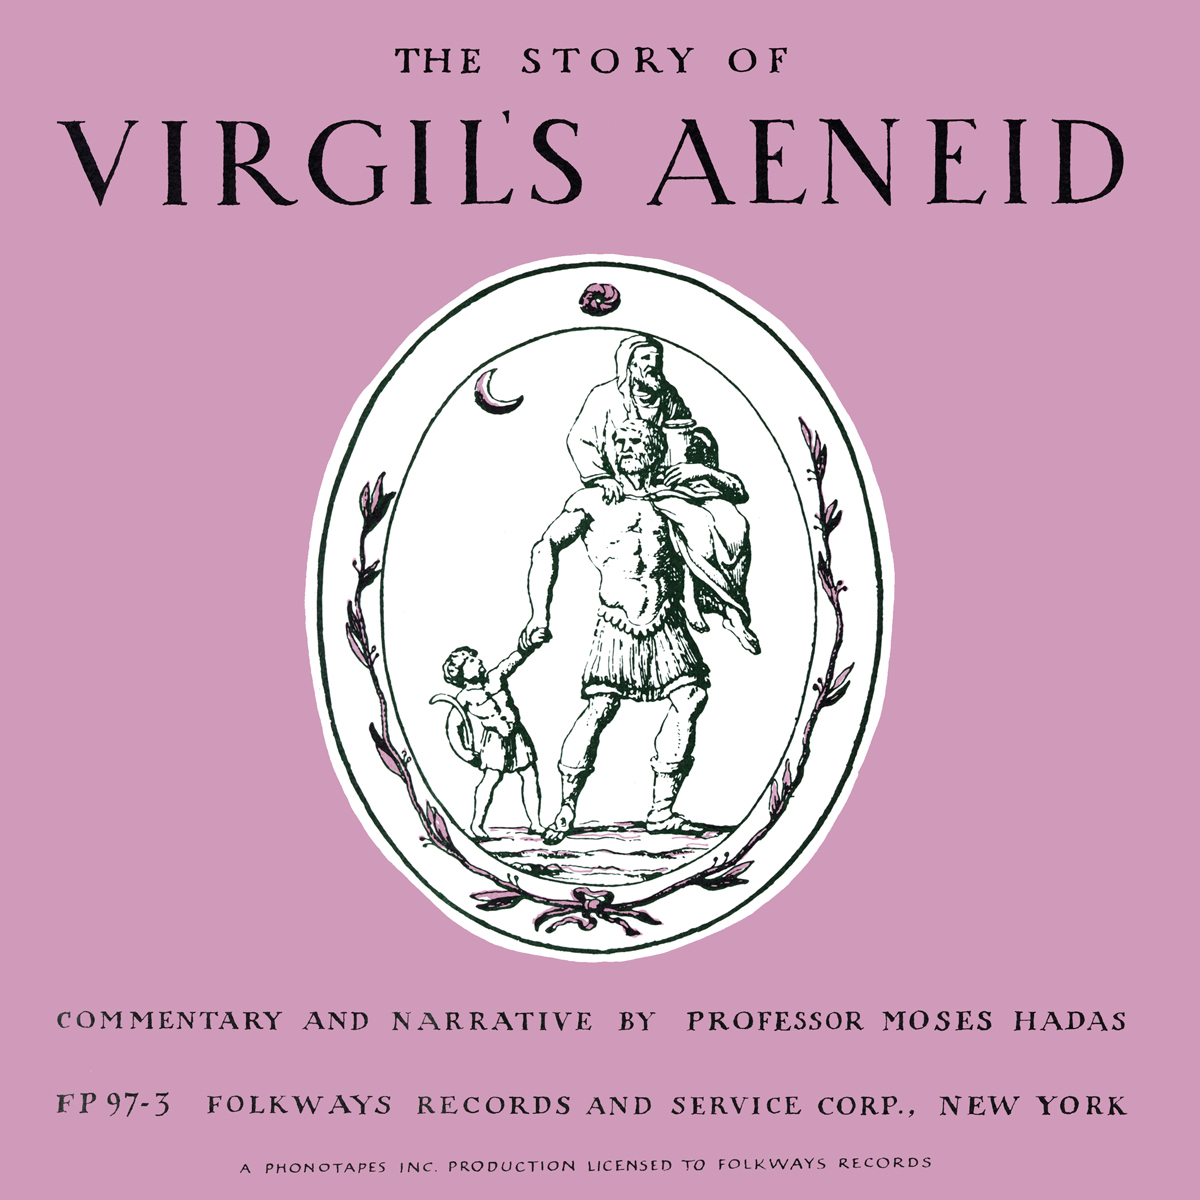 STORY OF VIRGIL'S AENEID: INTRODUCTION